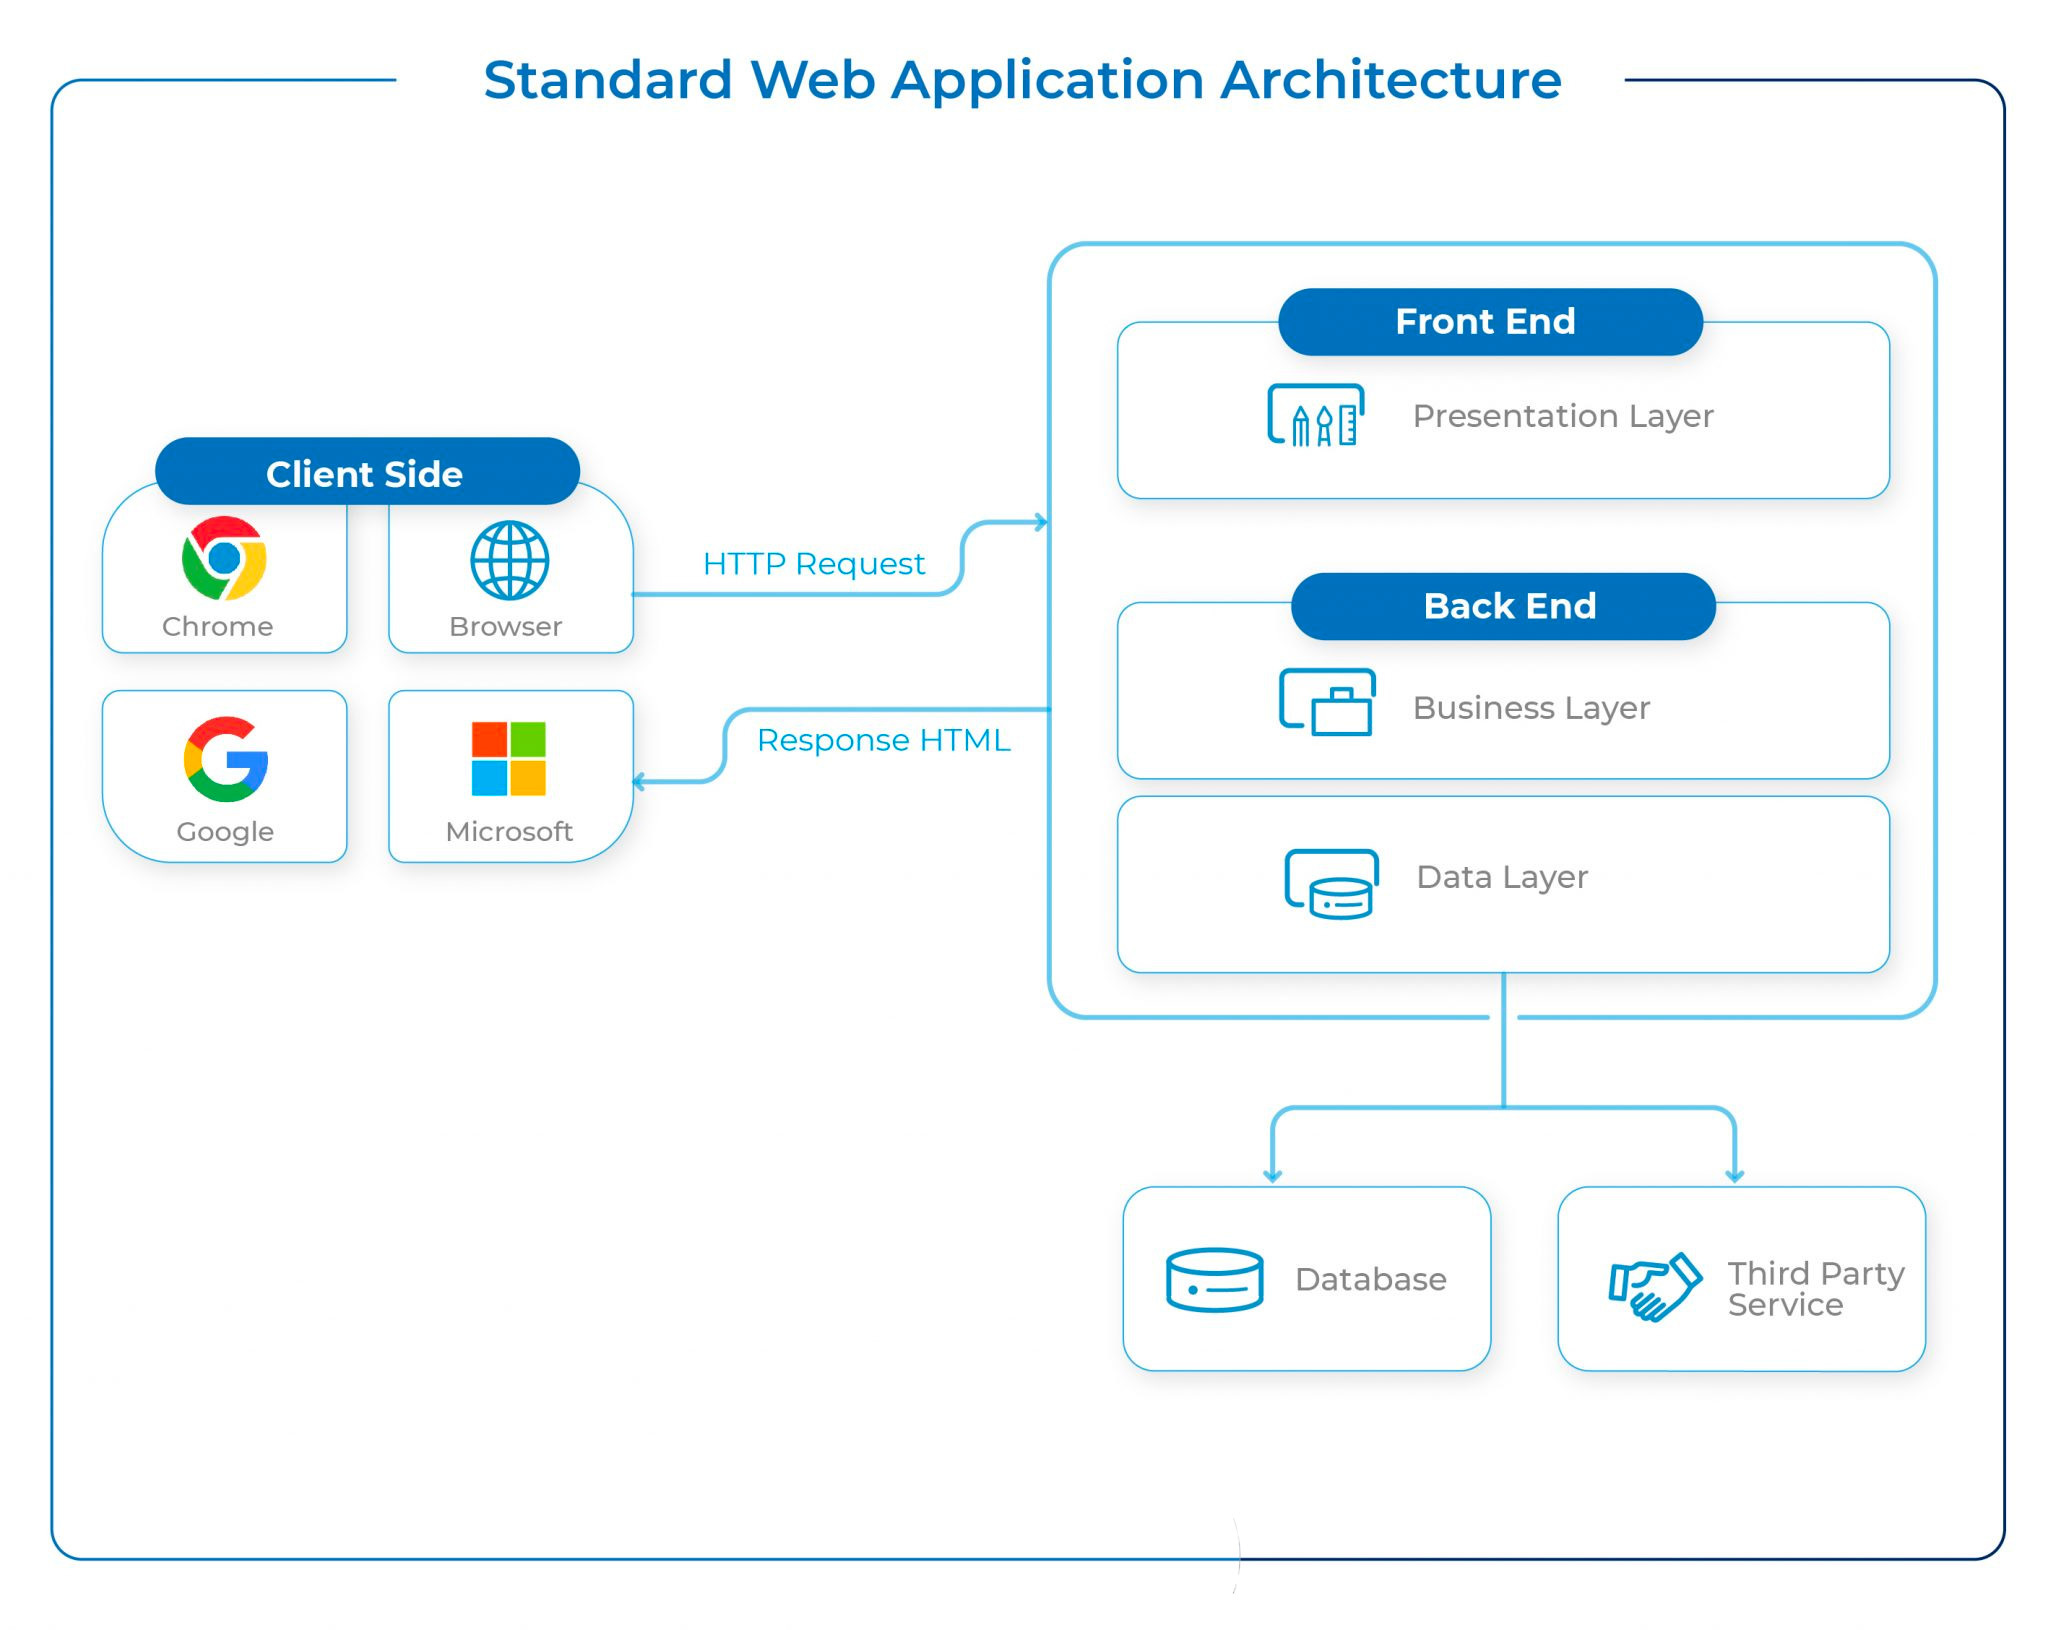 Standard web application architecture